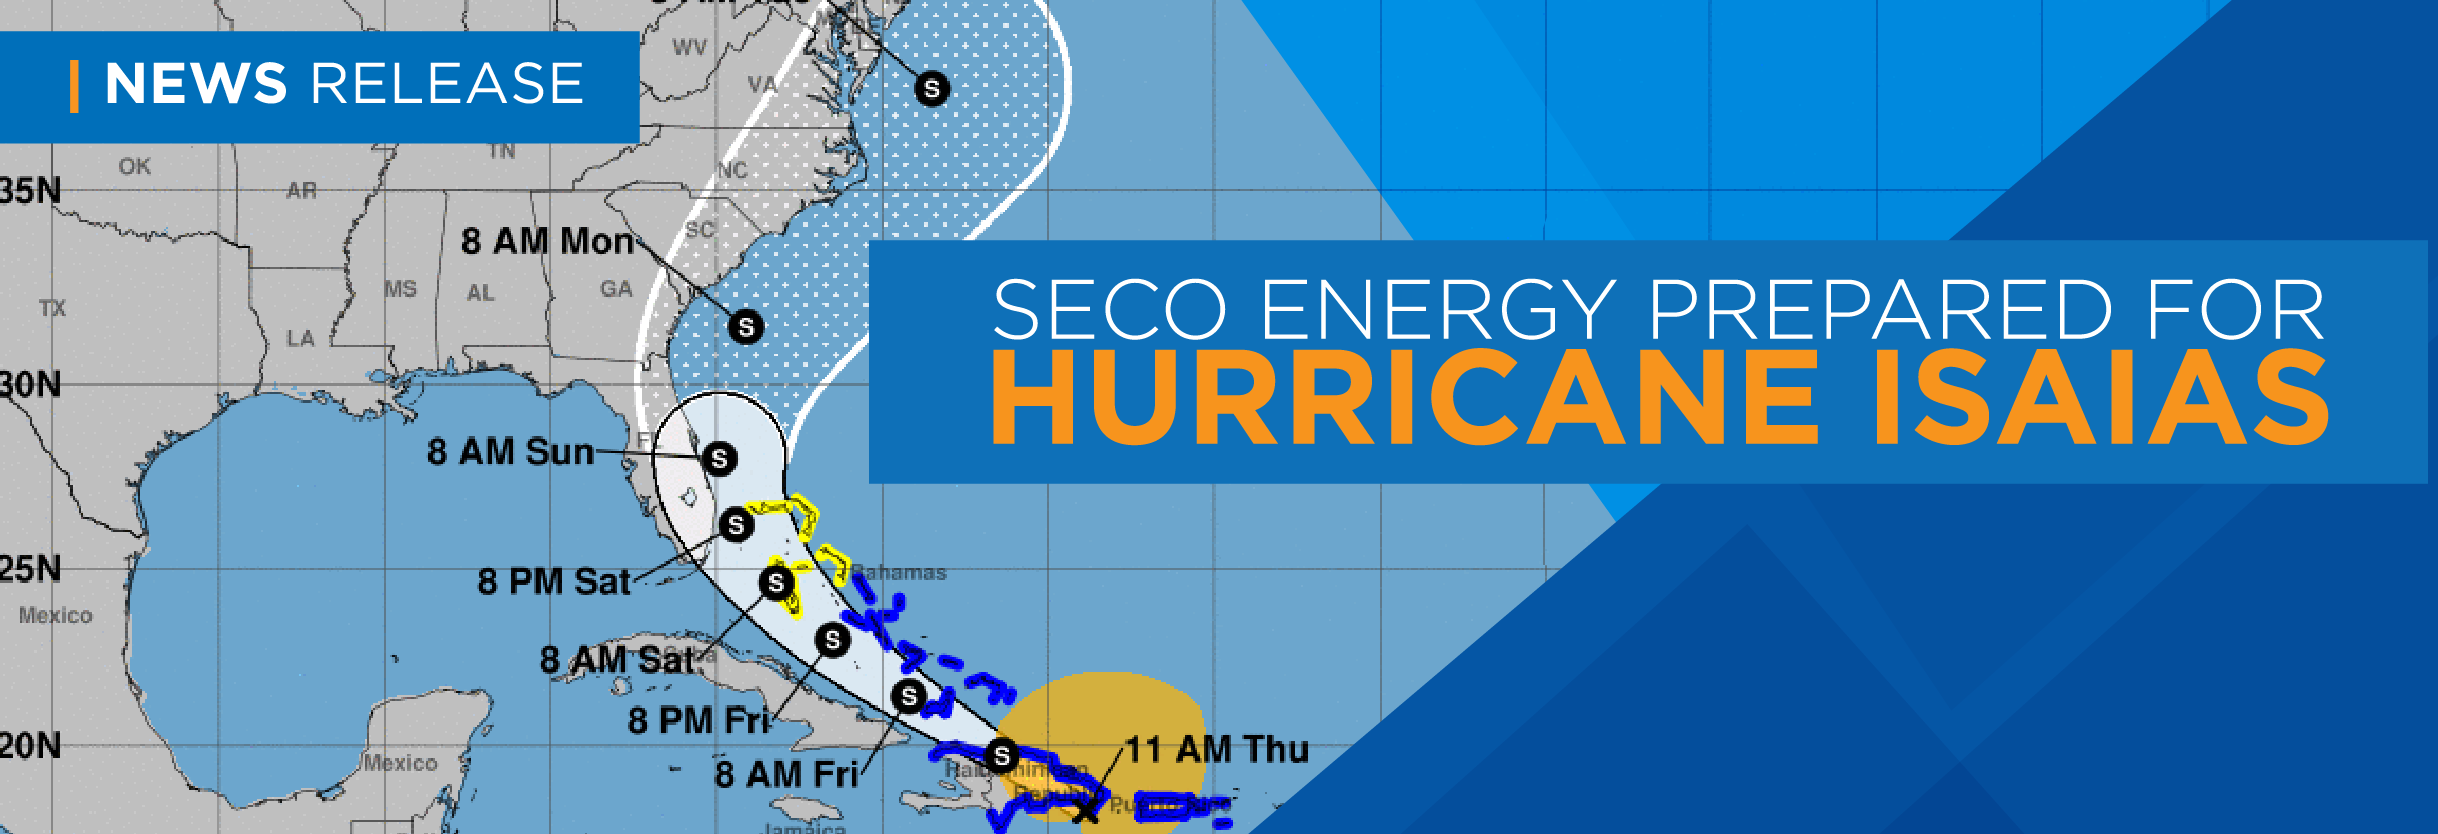 SECO Energy Prepared for Hurricane Isaias